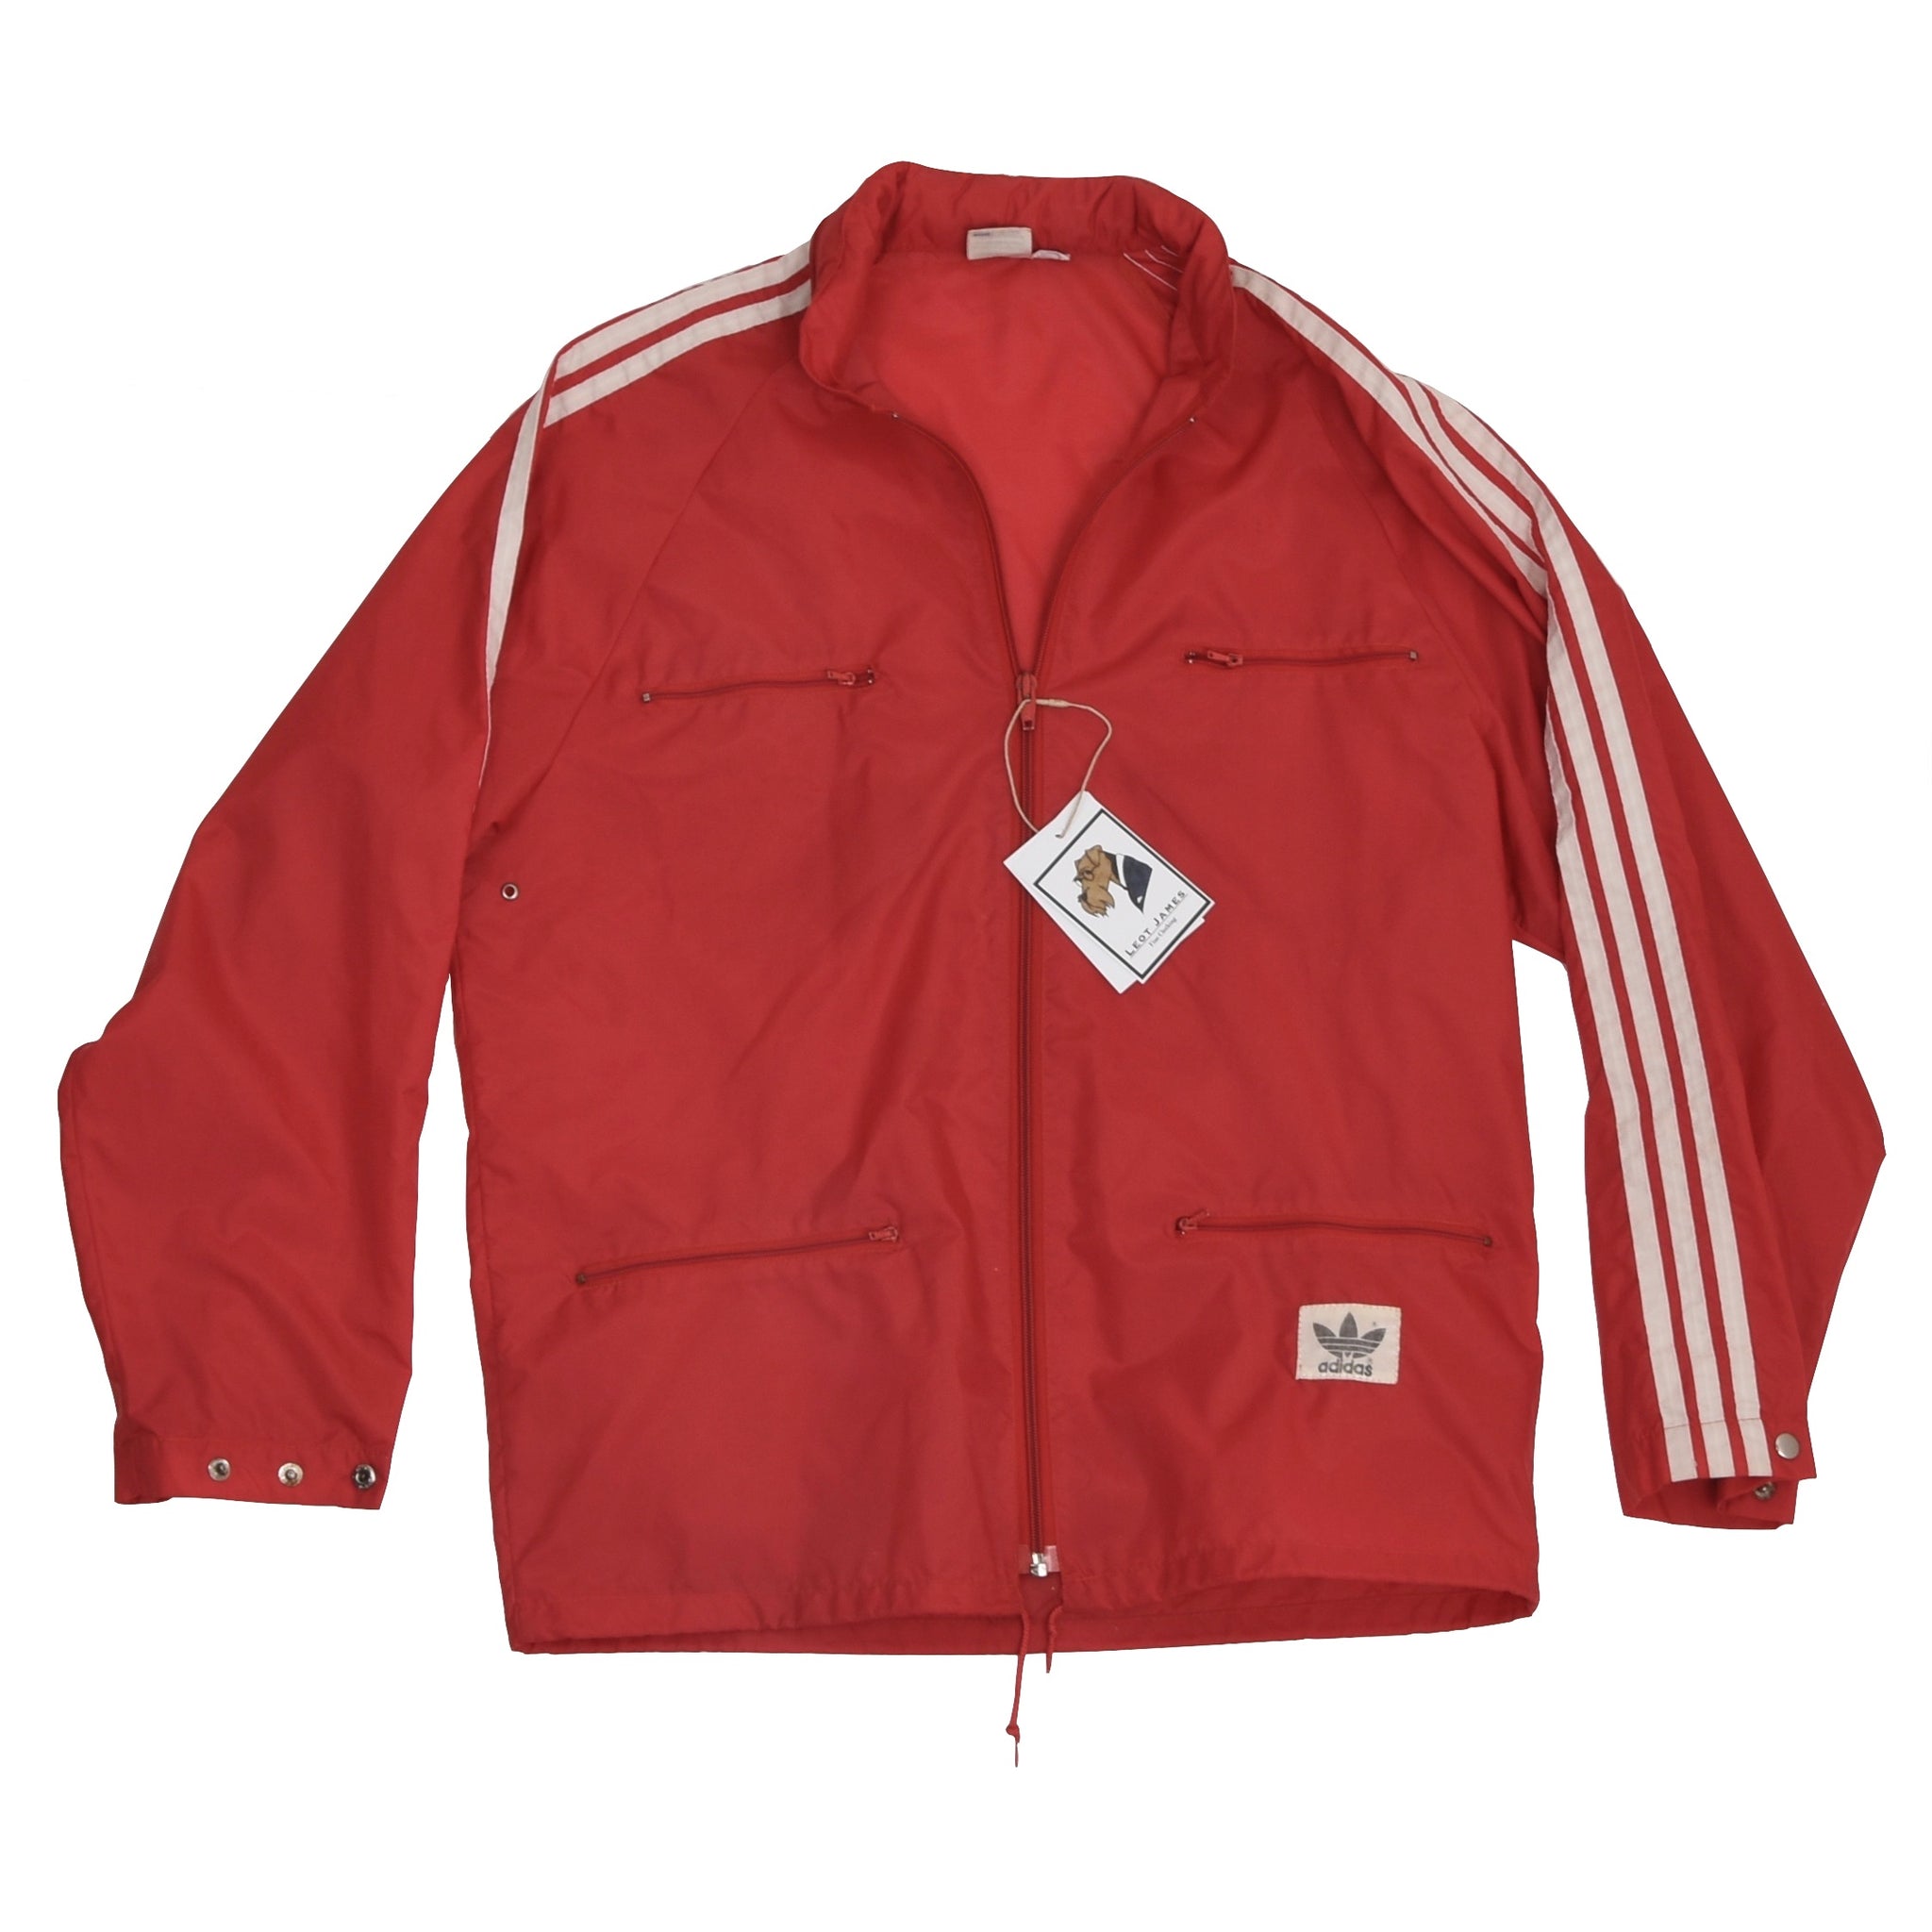 red adidas rain jacket